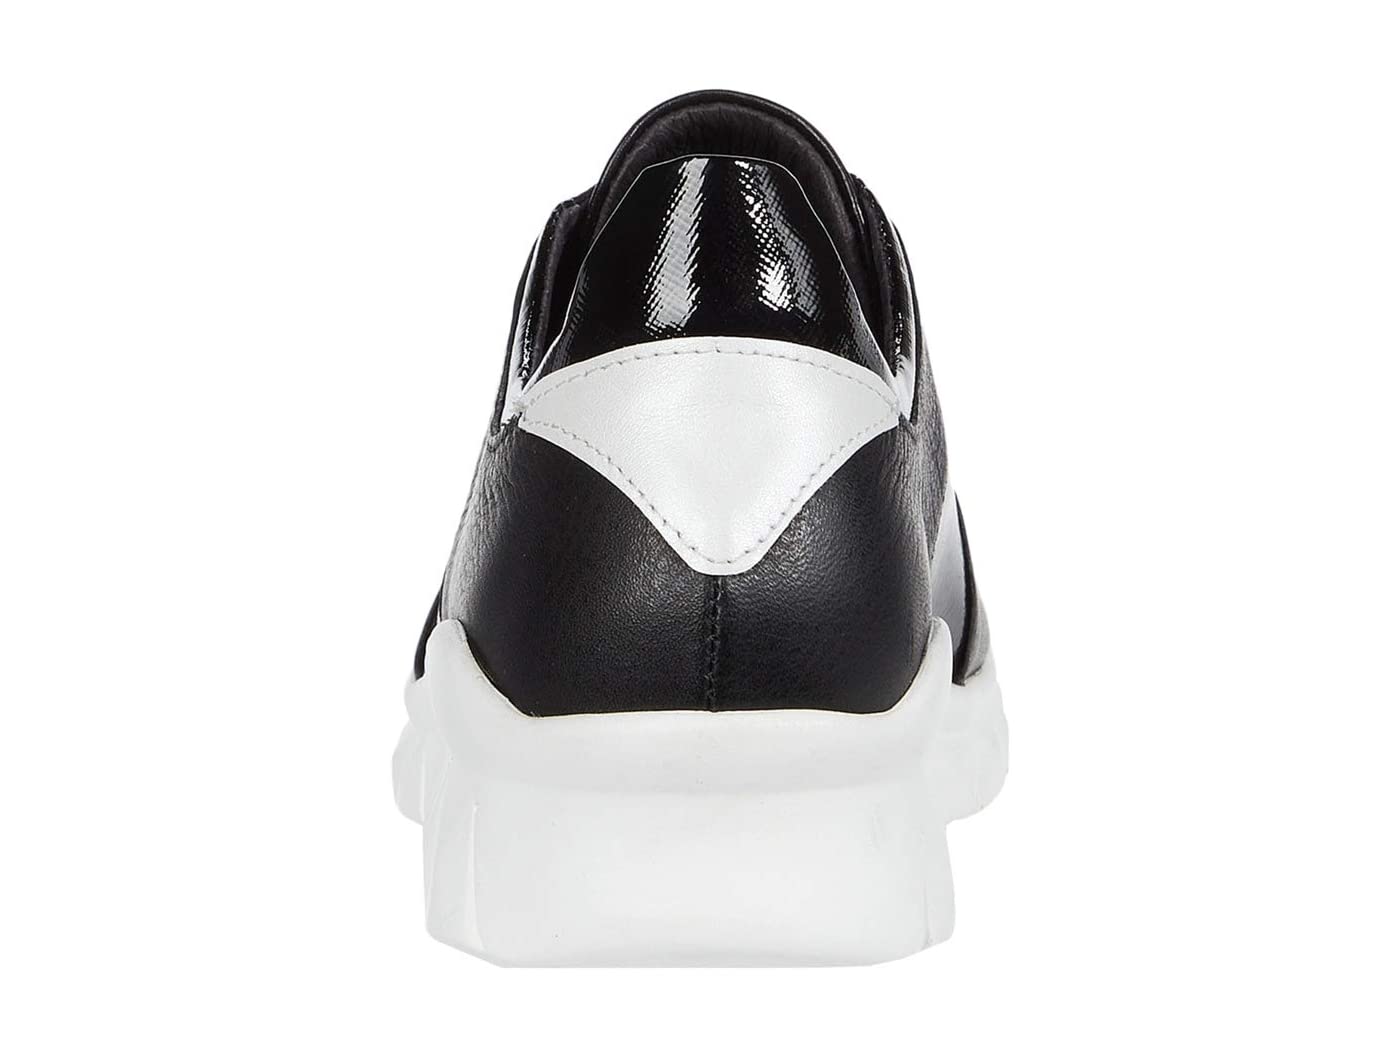 Buzz | Leather | Black/White - Shoe - Naot